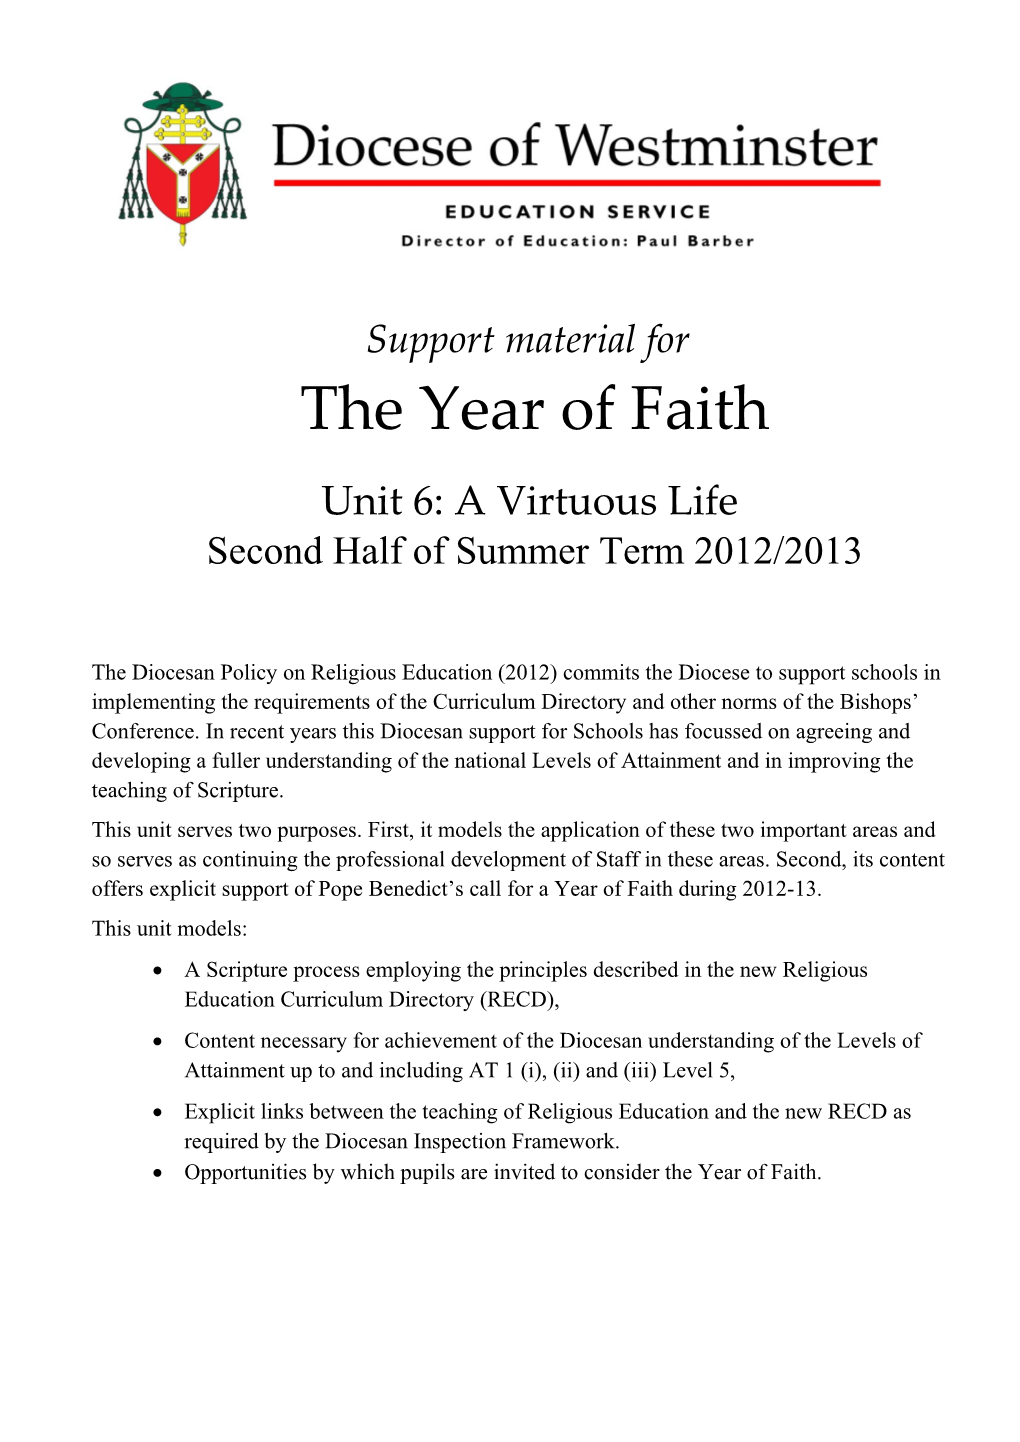 Second Half of Summer Term 2012/2013